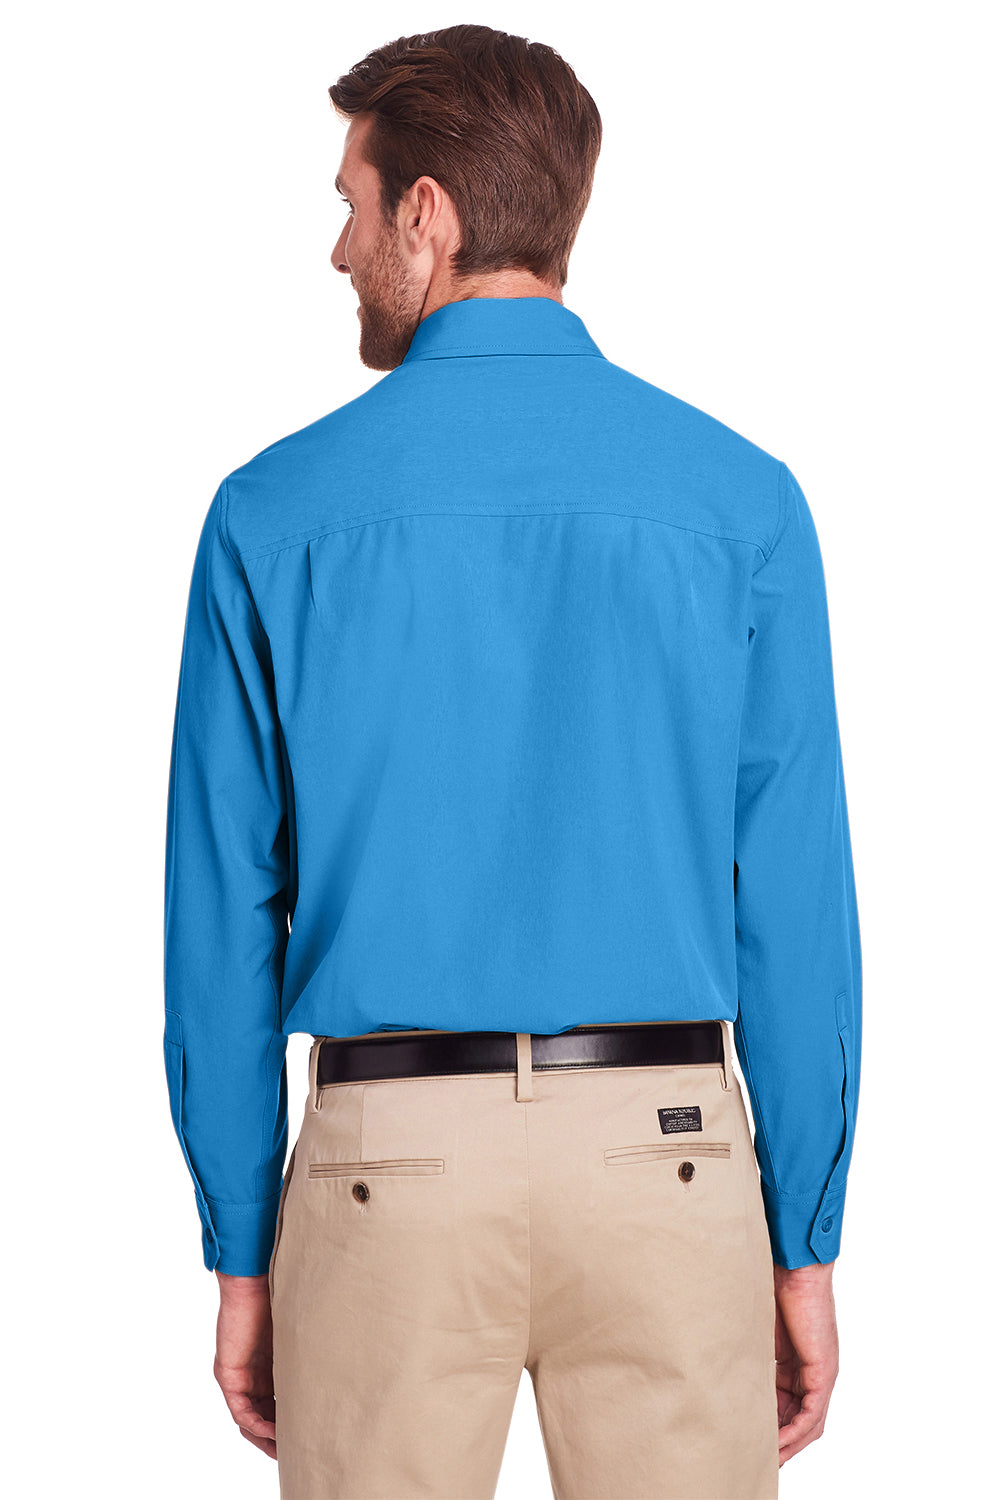 UltraClub UC500 Mens Bradley Performance Moisture Wicking Long Sleeve Button Down Shirt w/ Pocket Pacific Blue Back